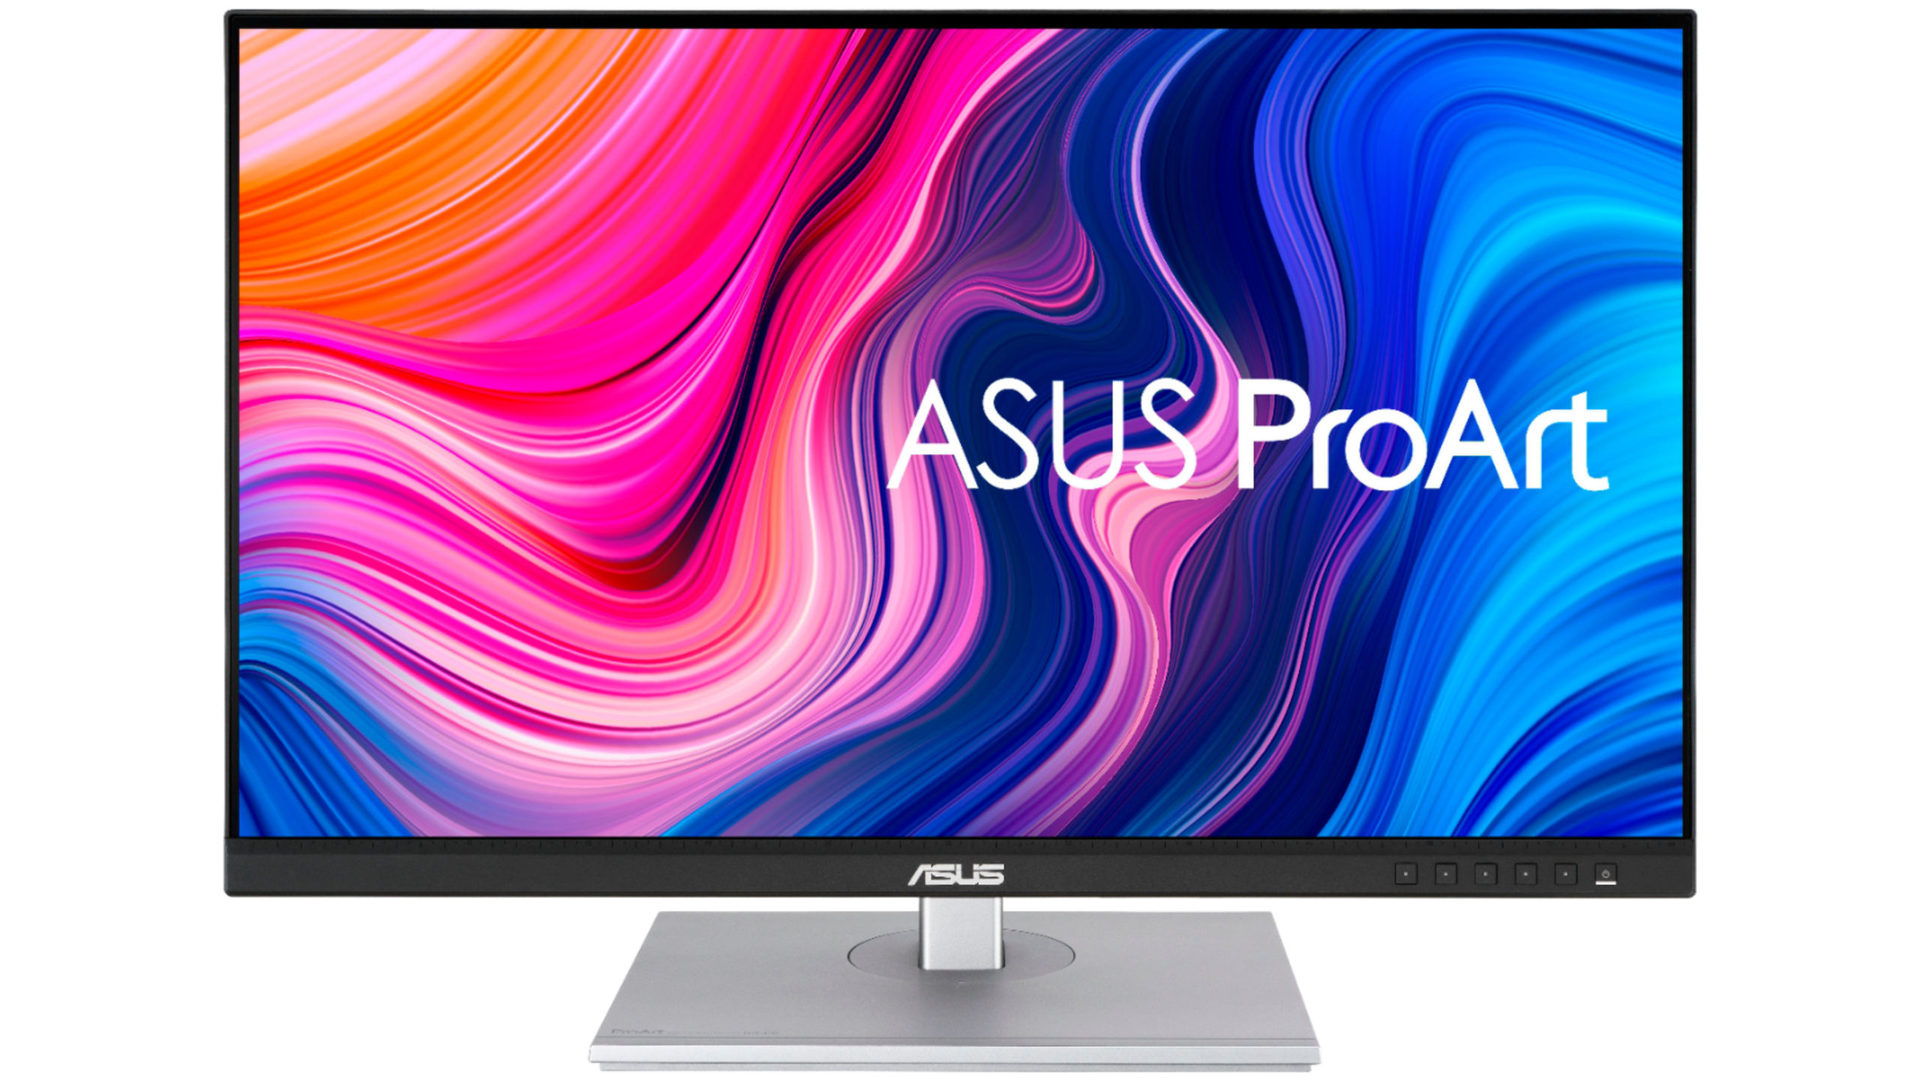 ASUS ProArt - The best 27-inch monitors